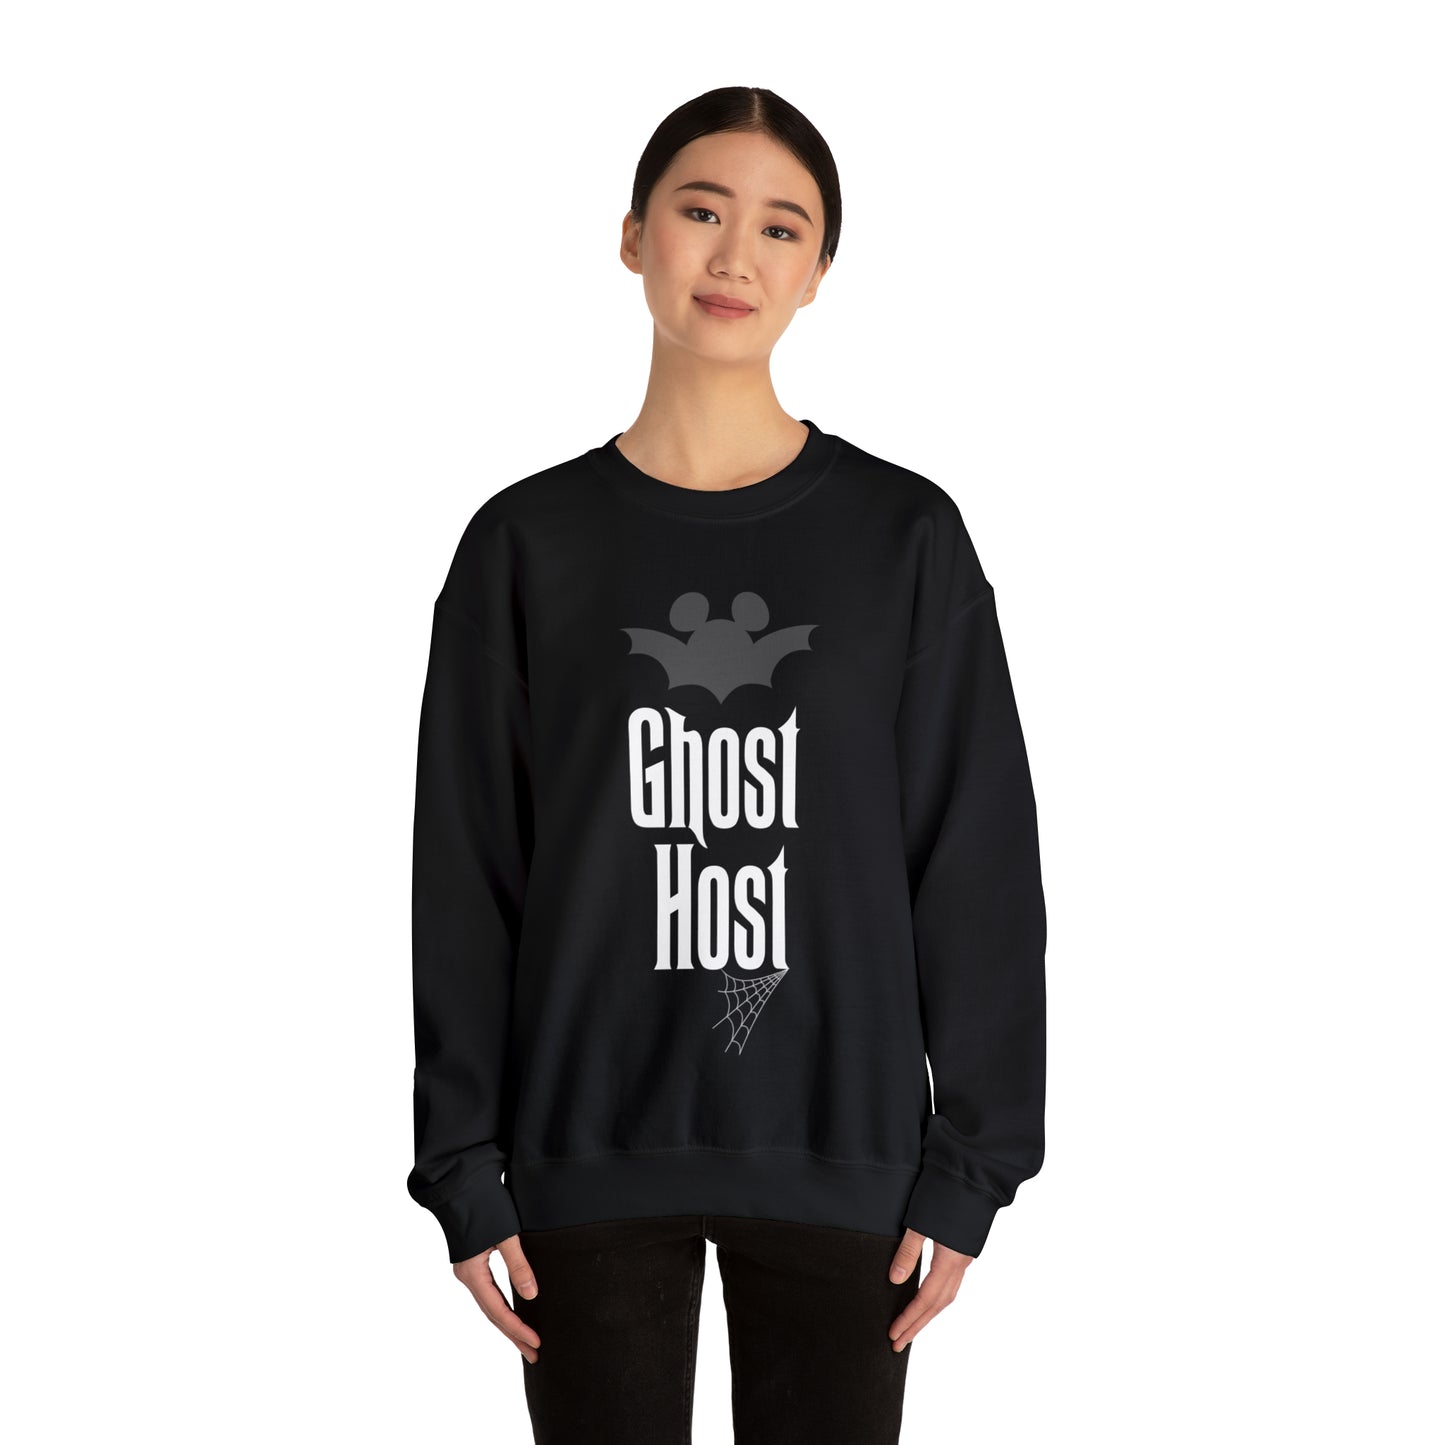 Ghost Host - Crewneck Sweatshirt